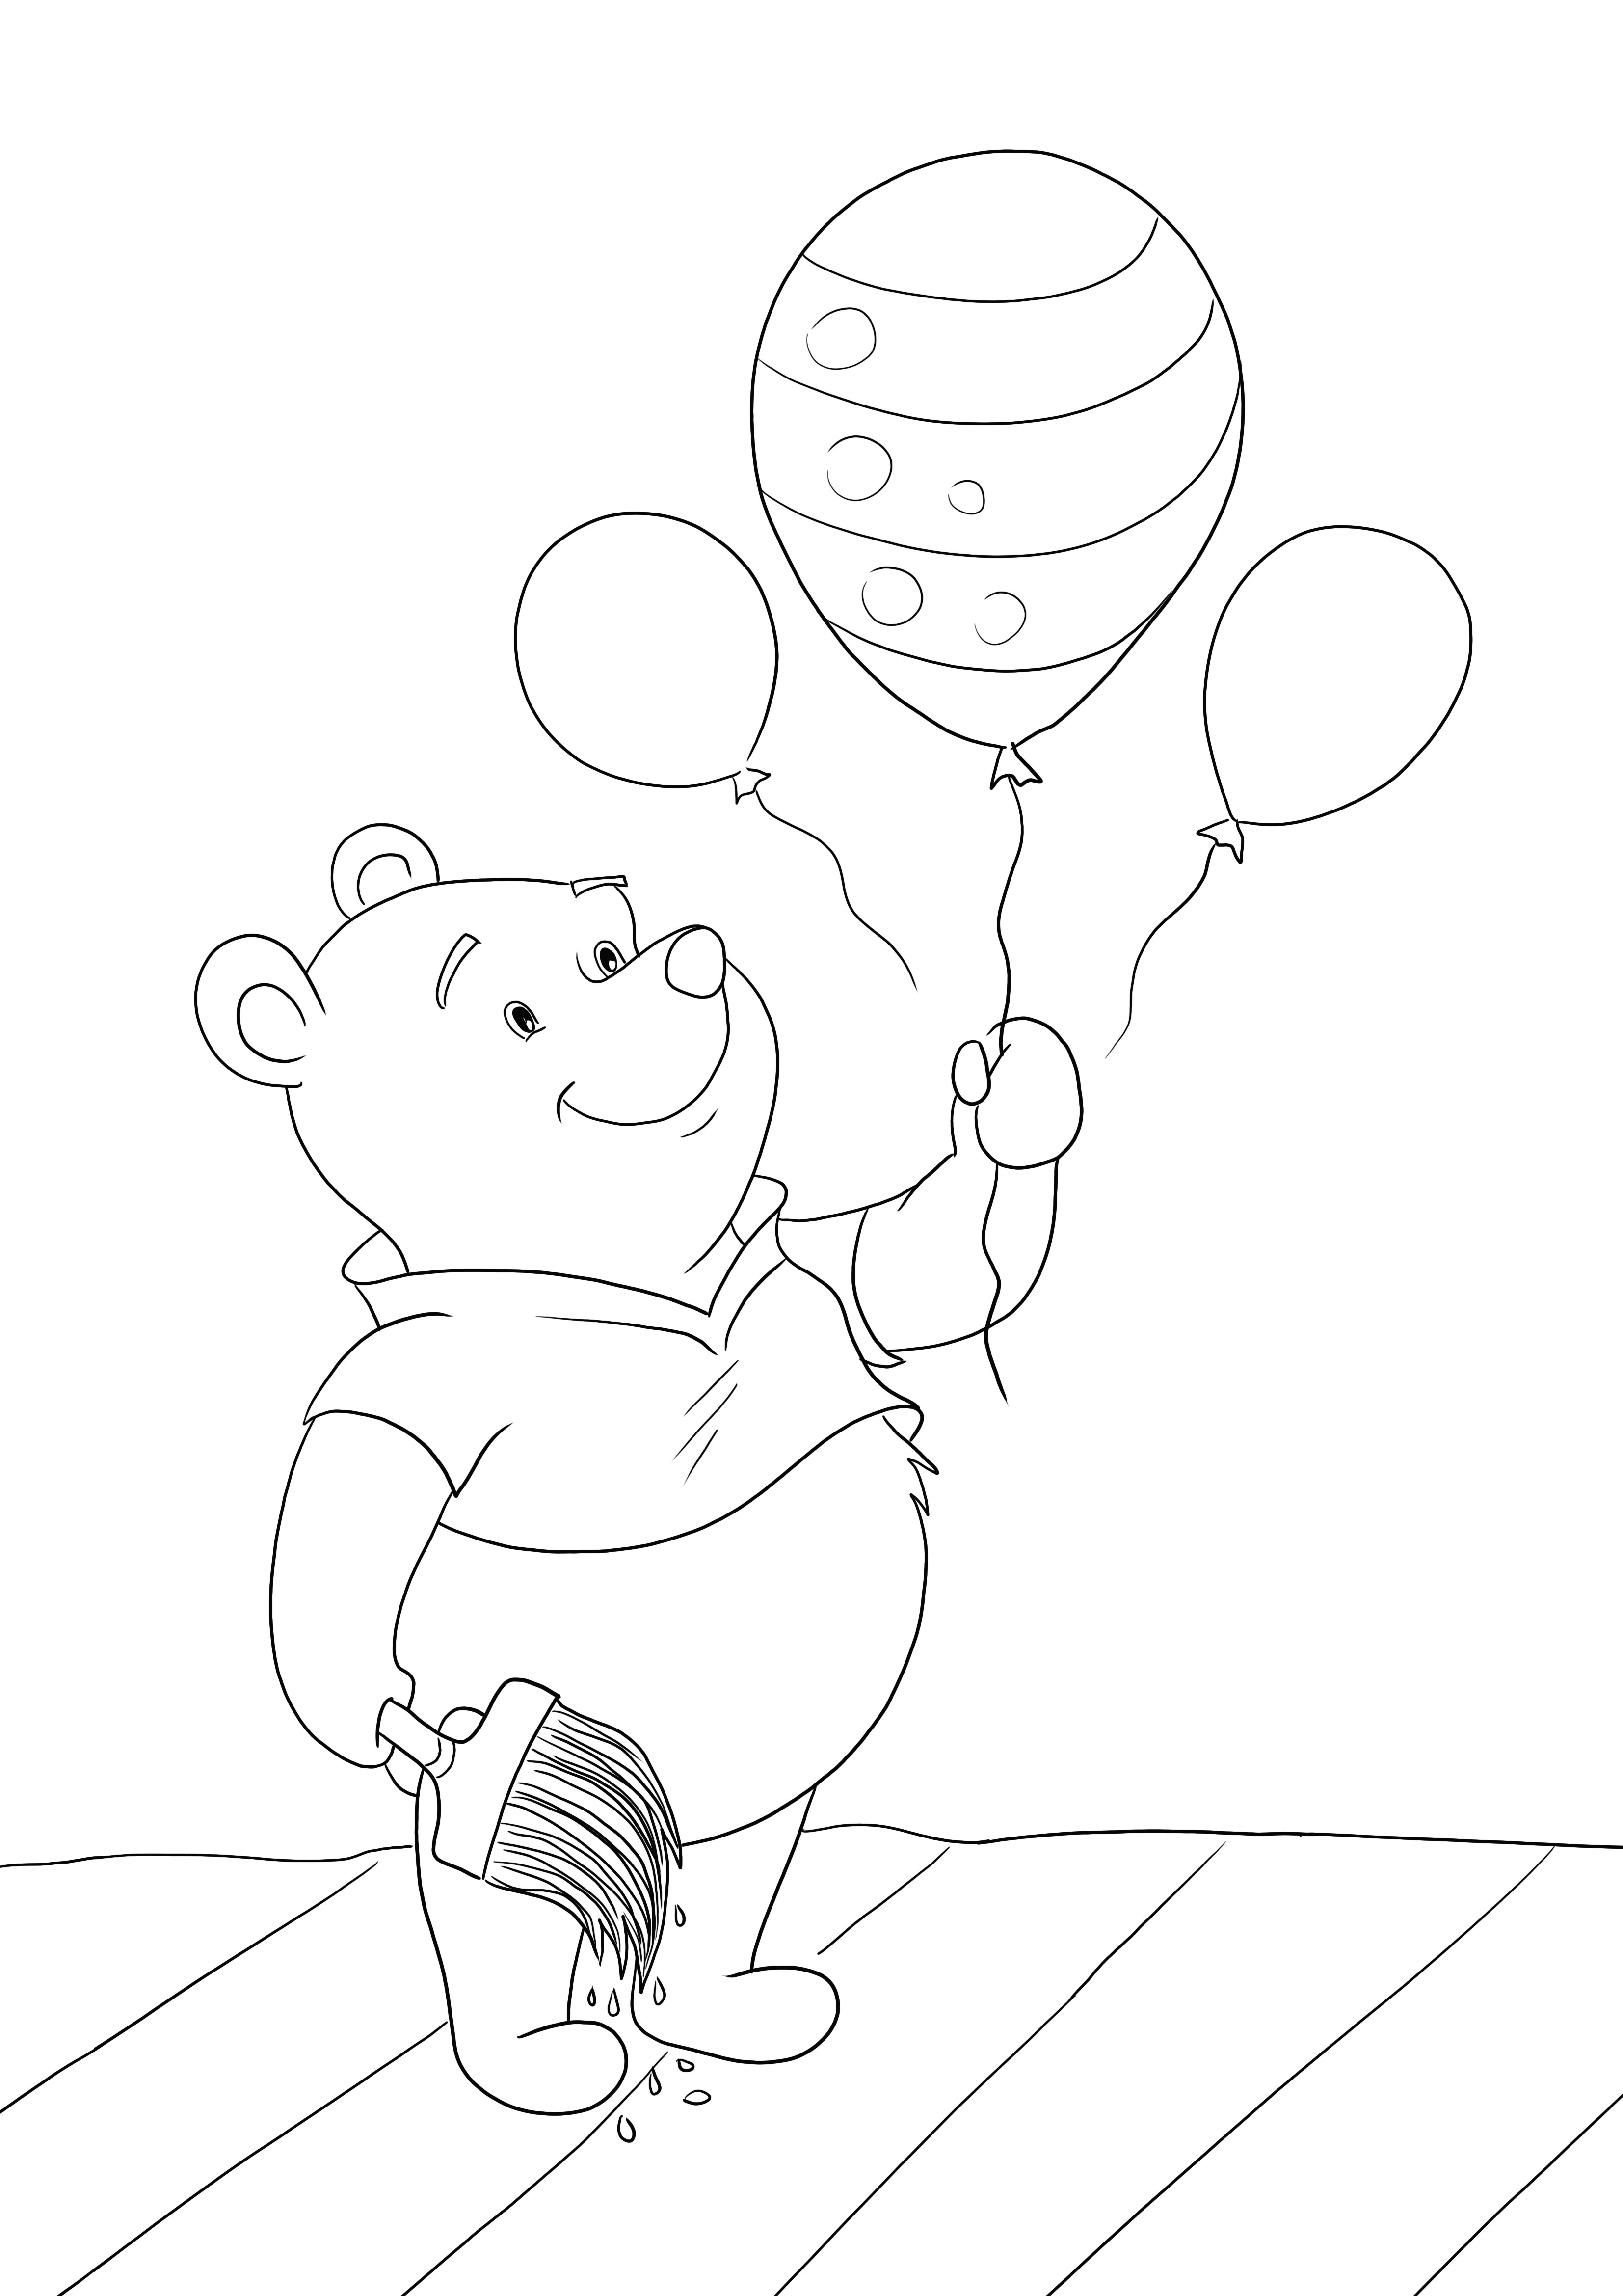 Winnie the Pooh with Easter Balloon impressão e download gratuito e colorido